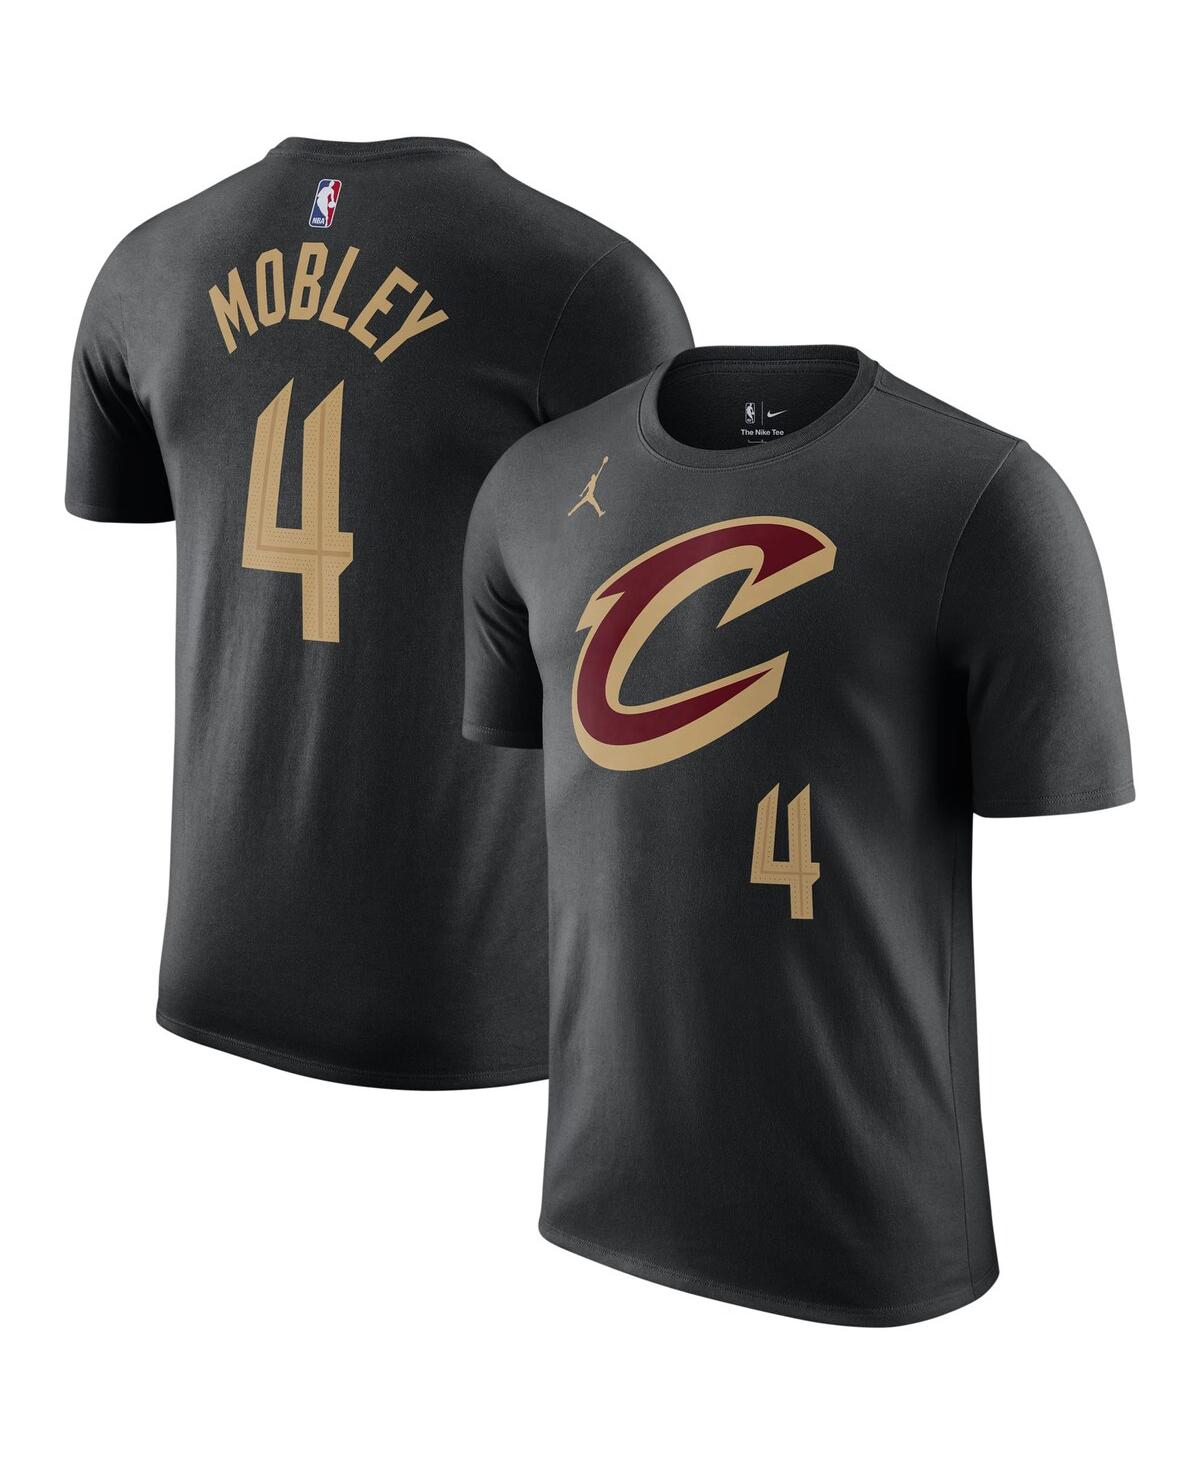 Men's Jordan Evan Mobley Black Cleveland Cavaliers 2022/23 Statement Edition Name and Number T-shirt - Black